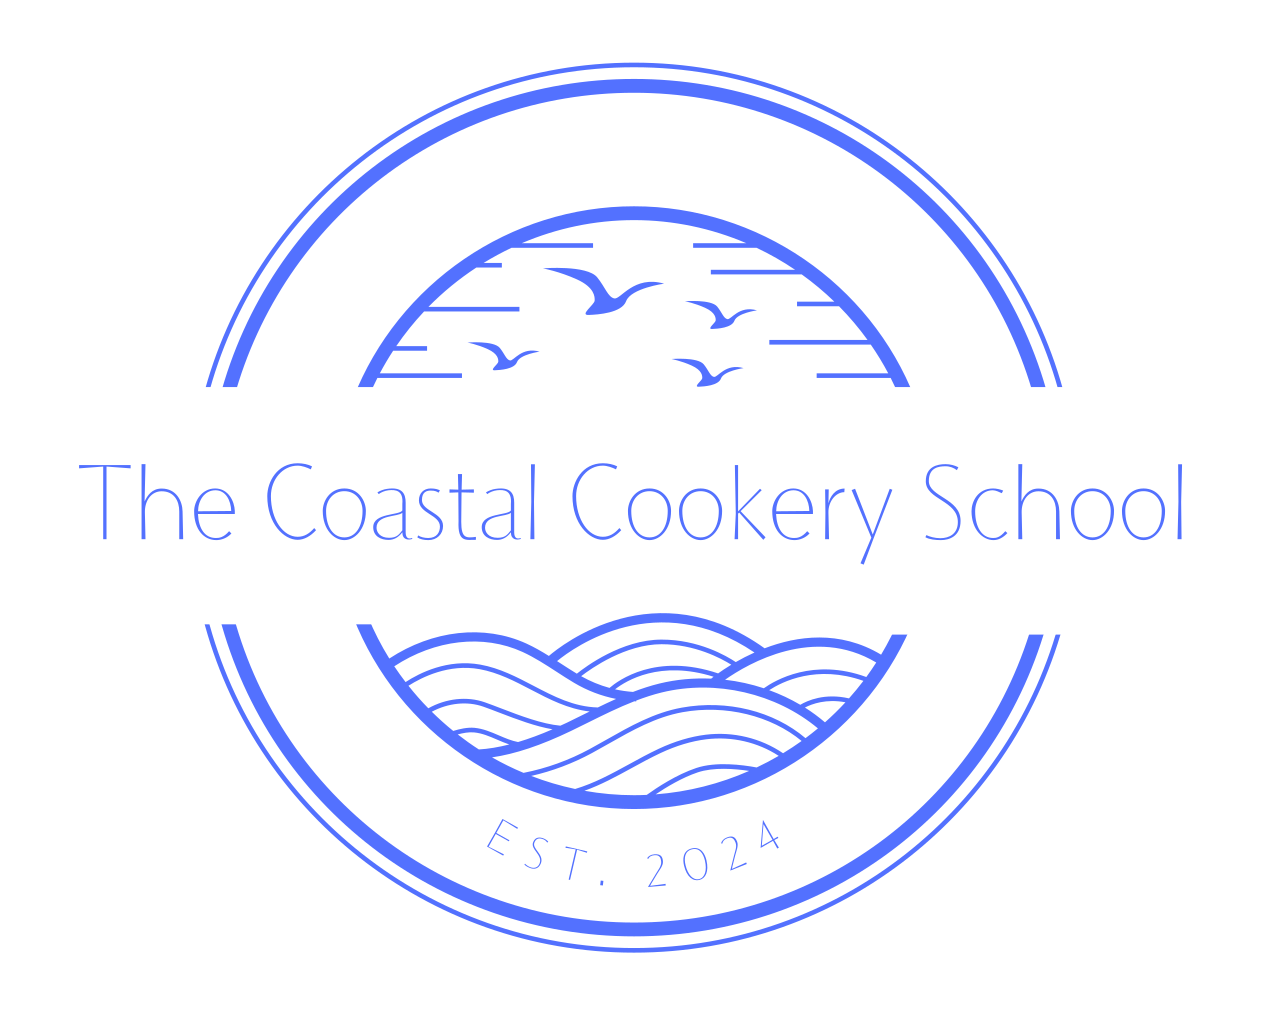 The Coastal Cookery School's logo